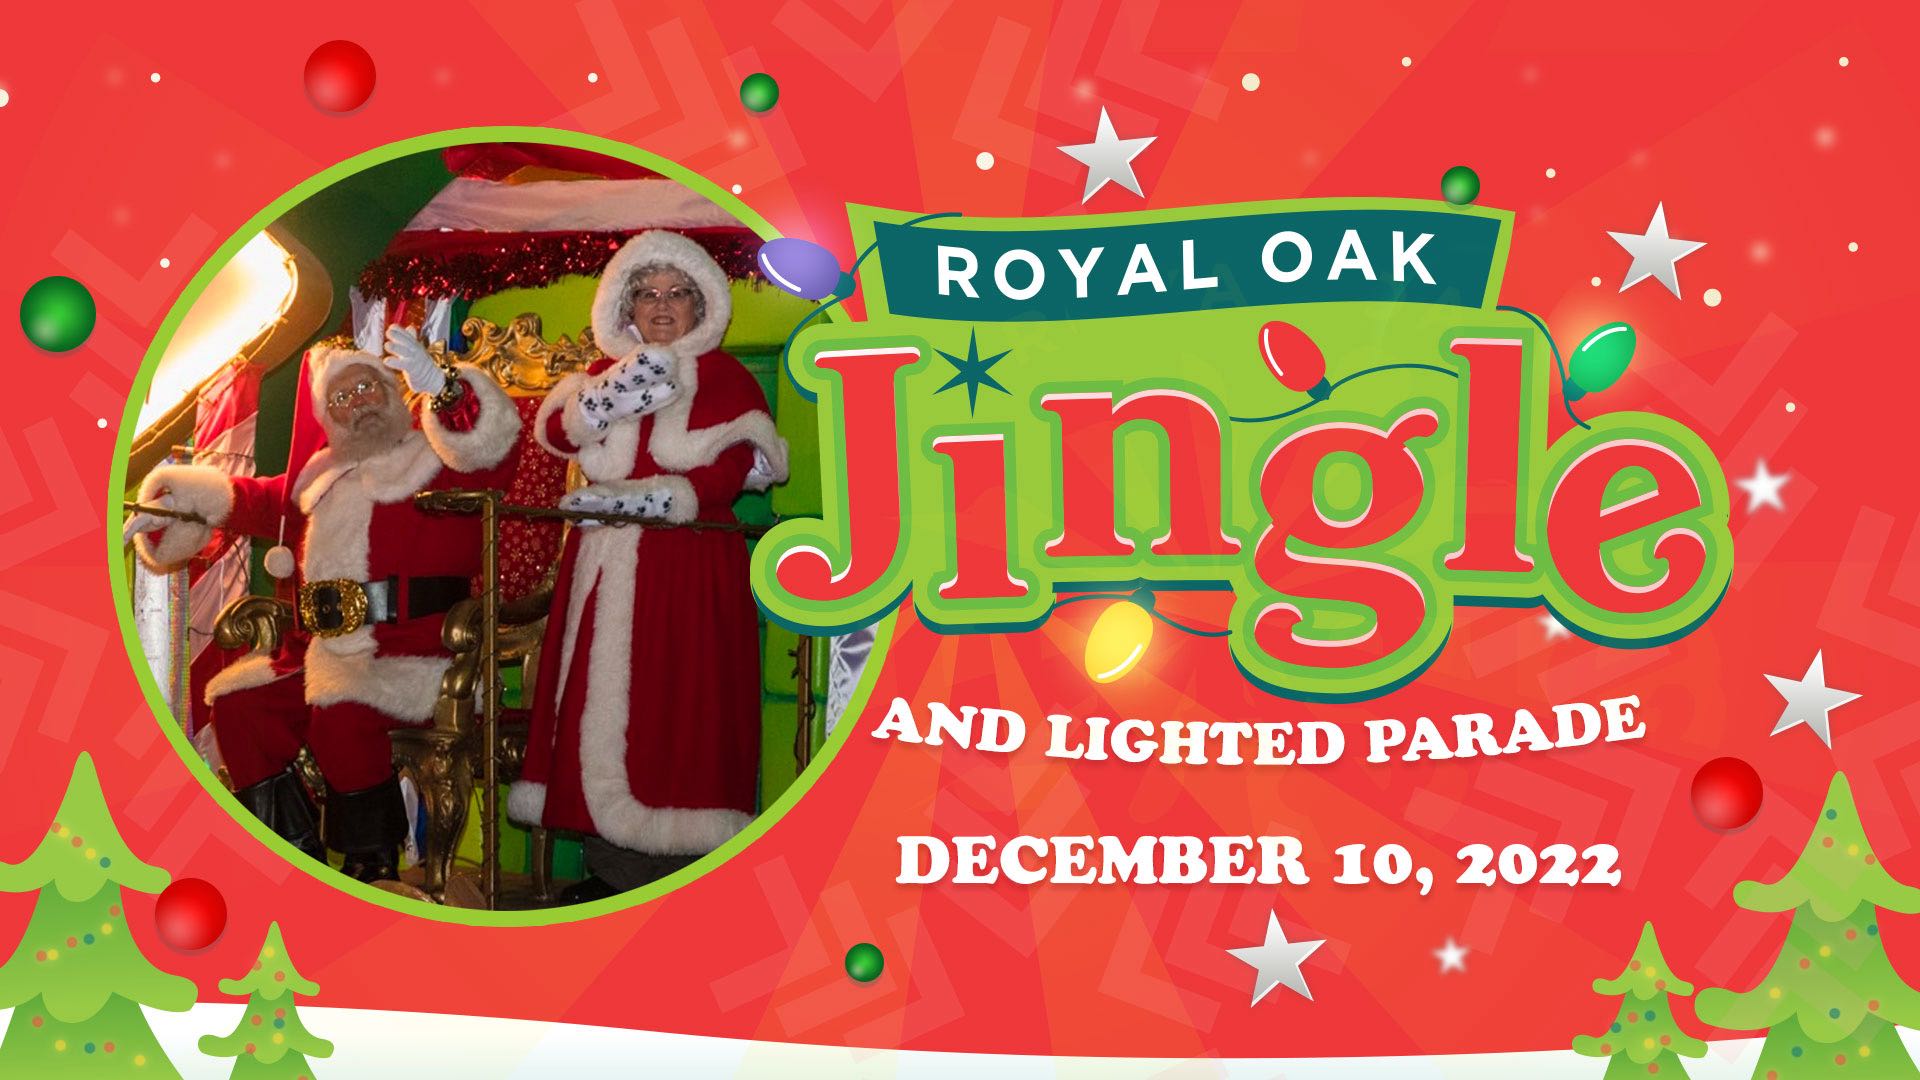 Royal Oak Jingle & Lighted Parade; December 10, 2022 featuring image of Santa & Mrs. Claus